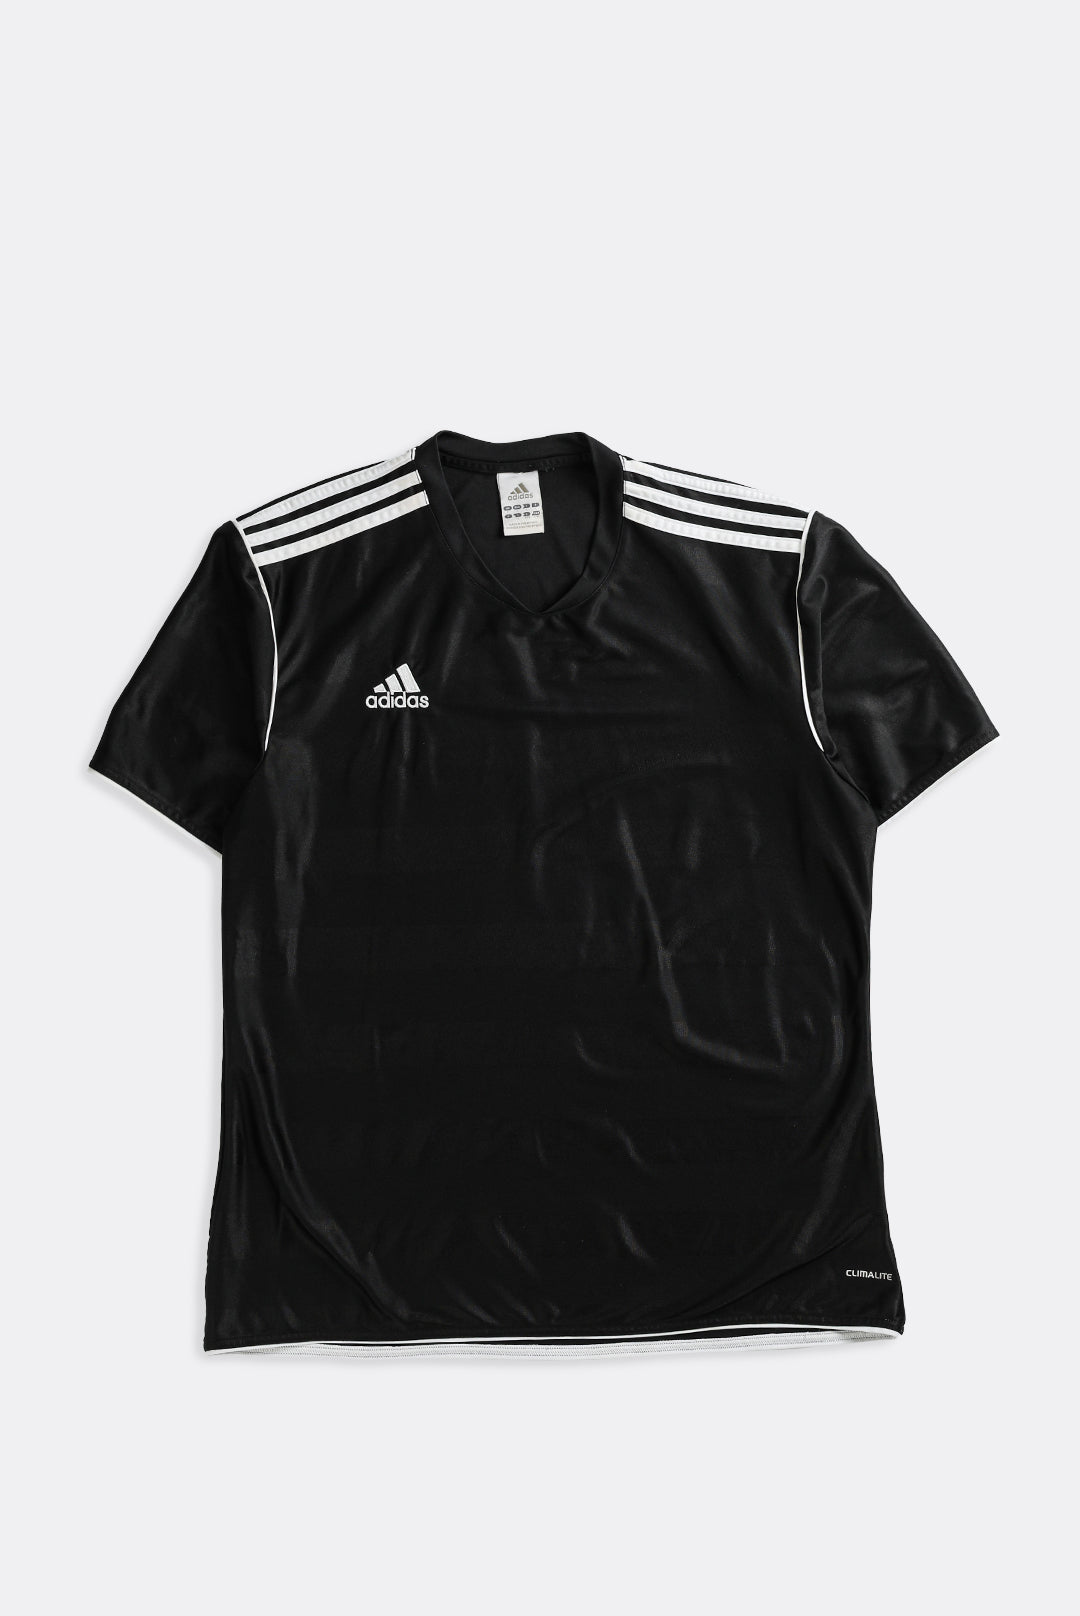 Retro Adidas Football Shirts and Classic Adidas Football Shirts